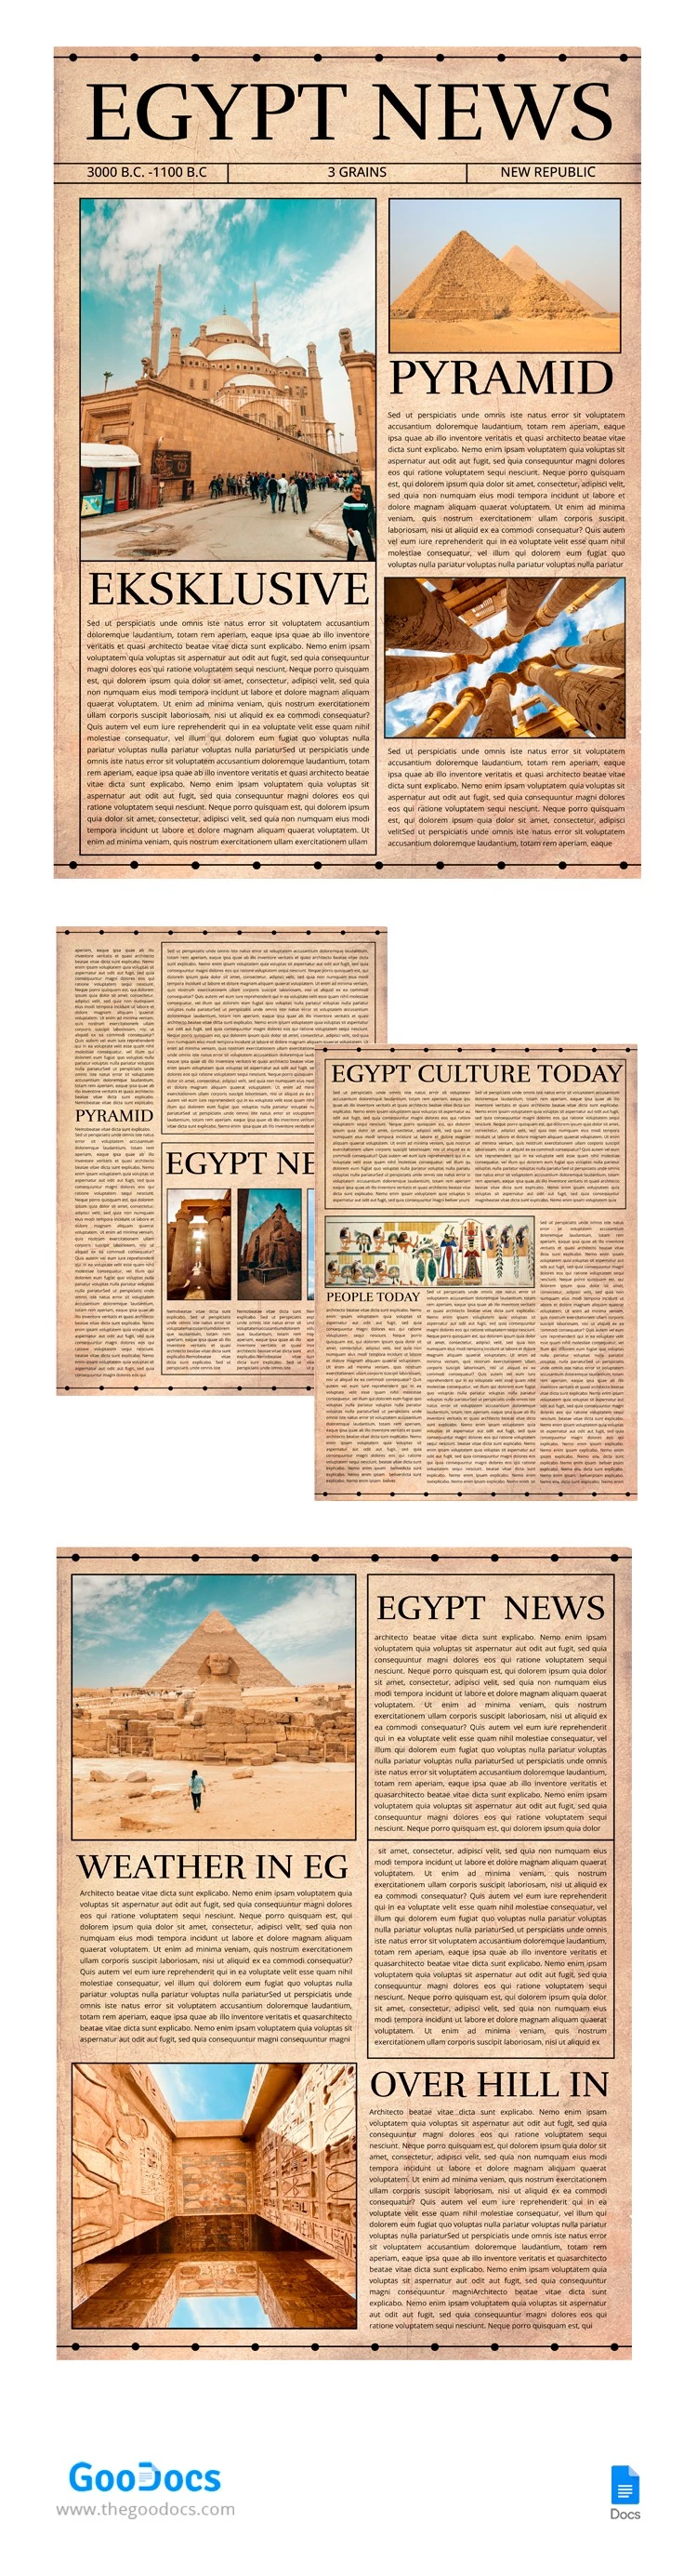 Egypt Newspaper - free Google Docs Template - 10065740